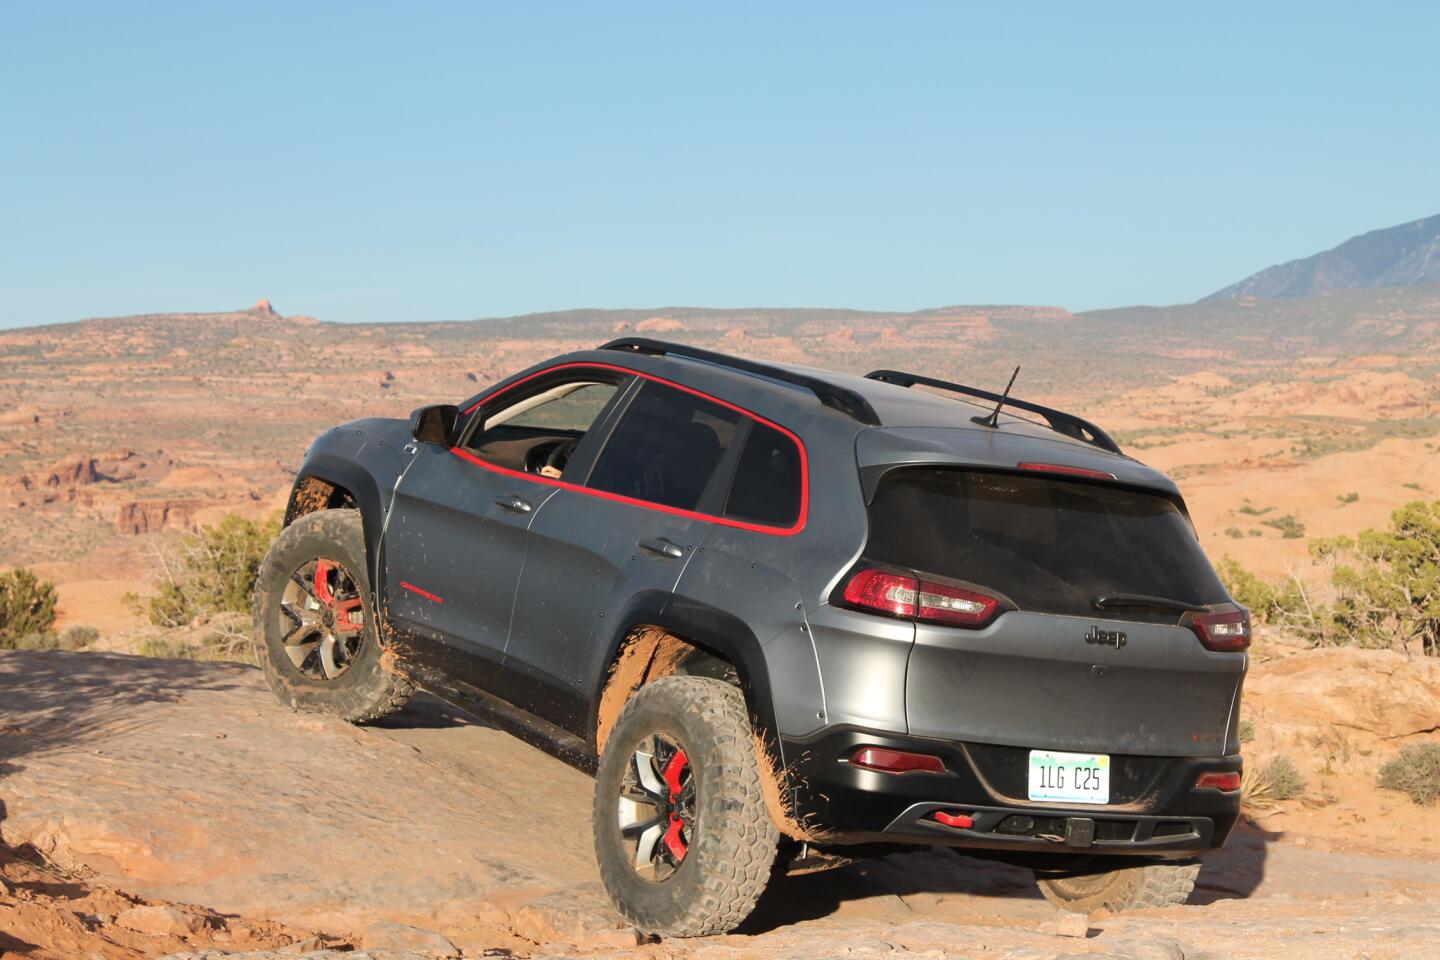 Jeep Cherokee Dakar concept